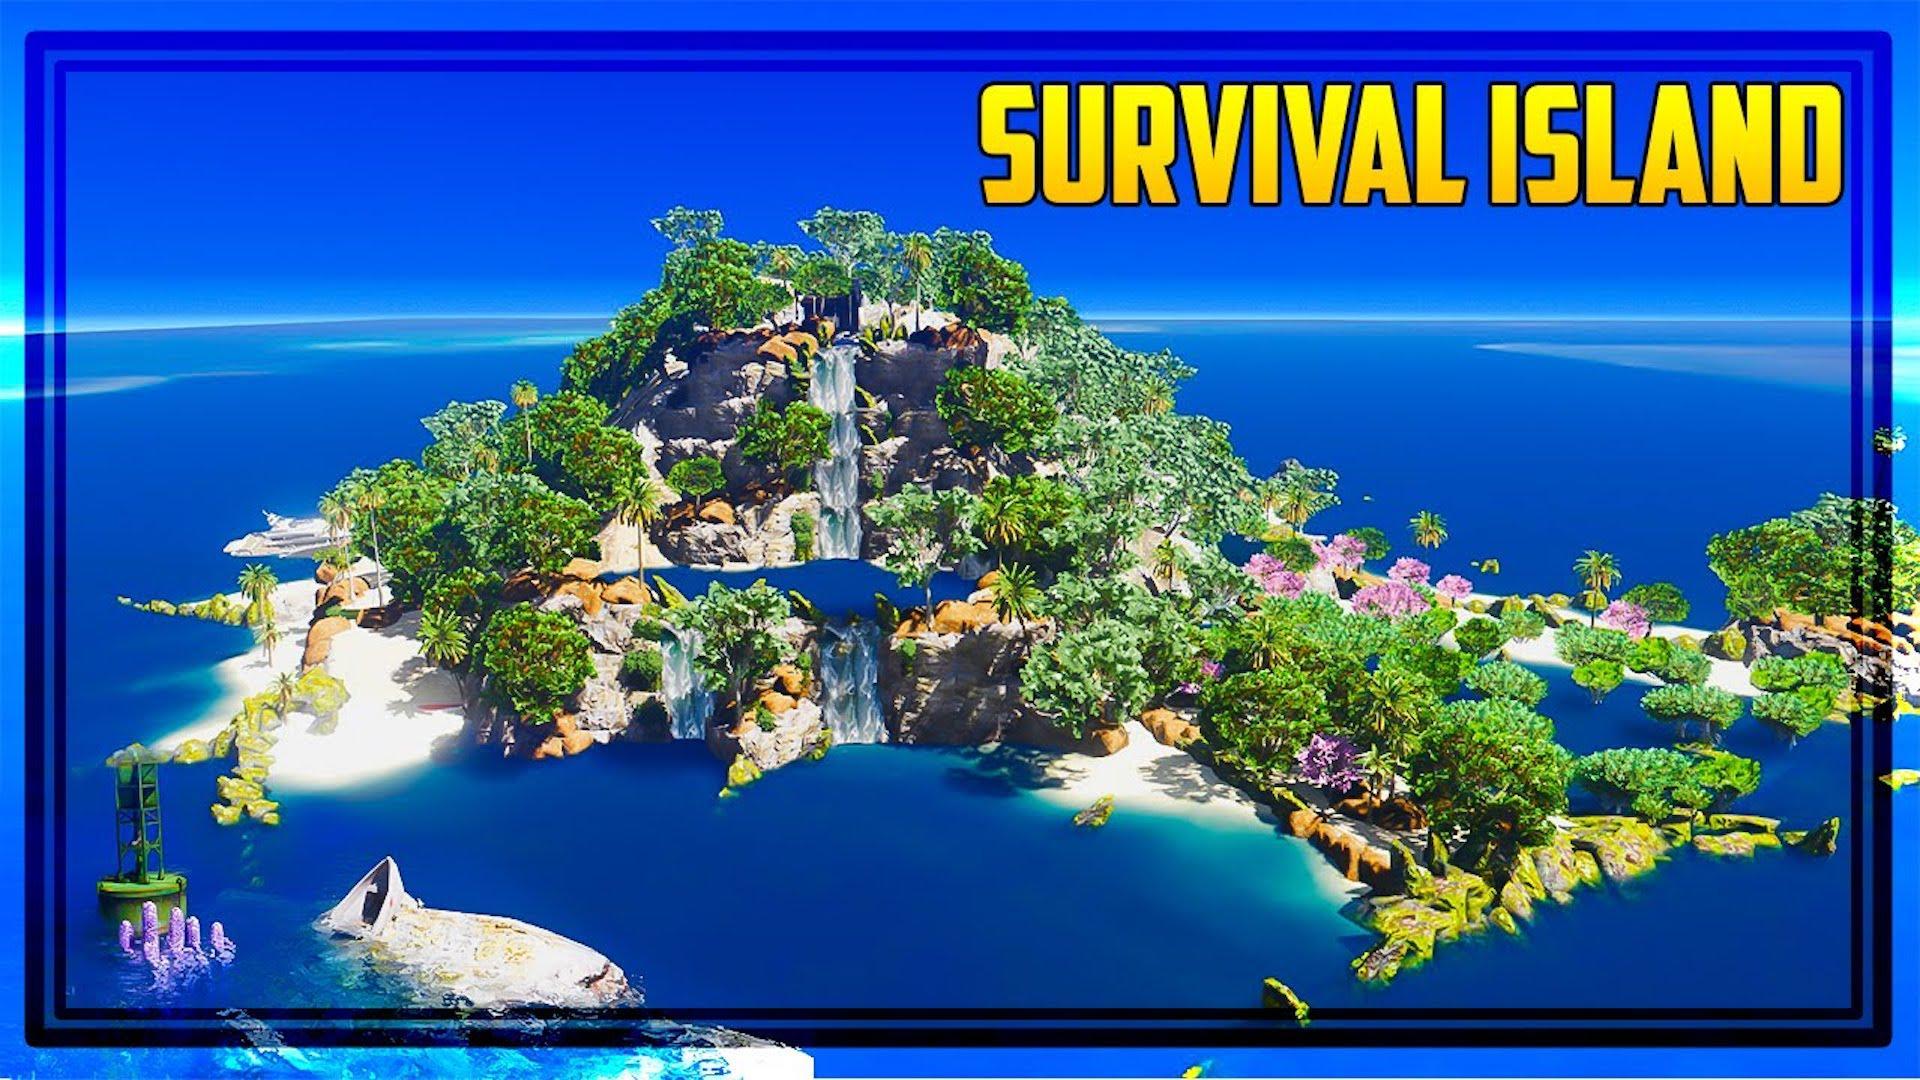 survival craft 2 maps